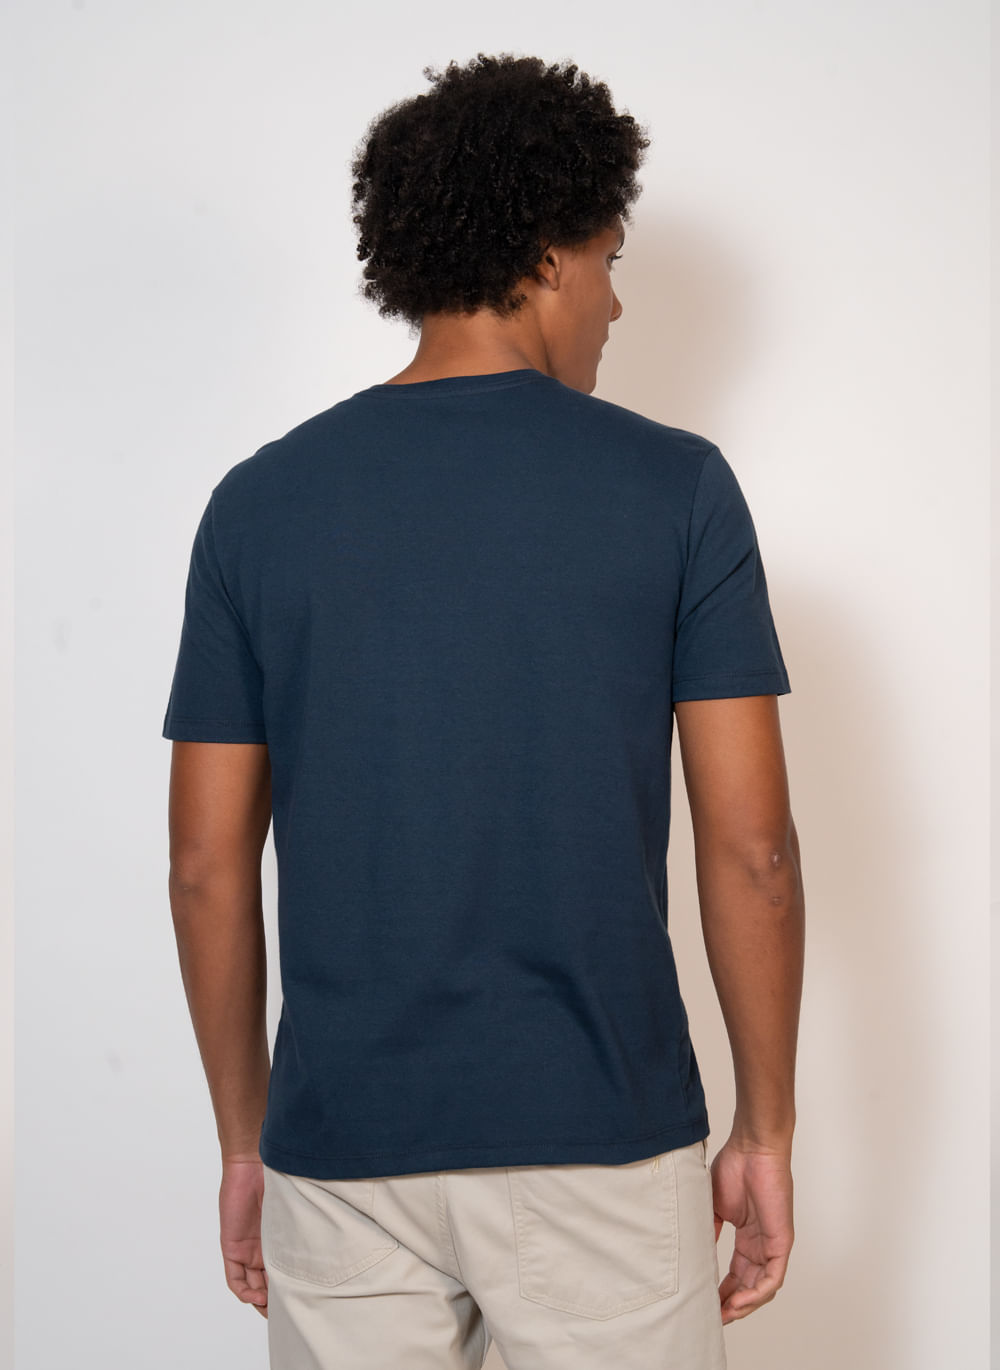 Camiseta-Estampada-Aleatory-Gradient-Marinho-Azul-Marinho-P